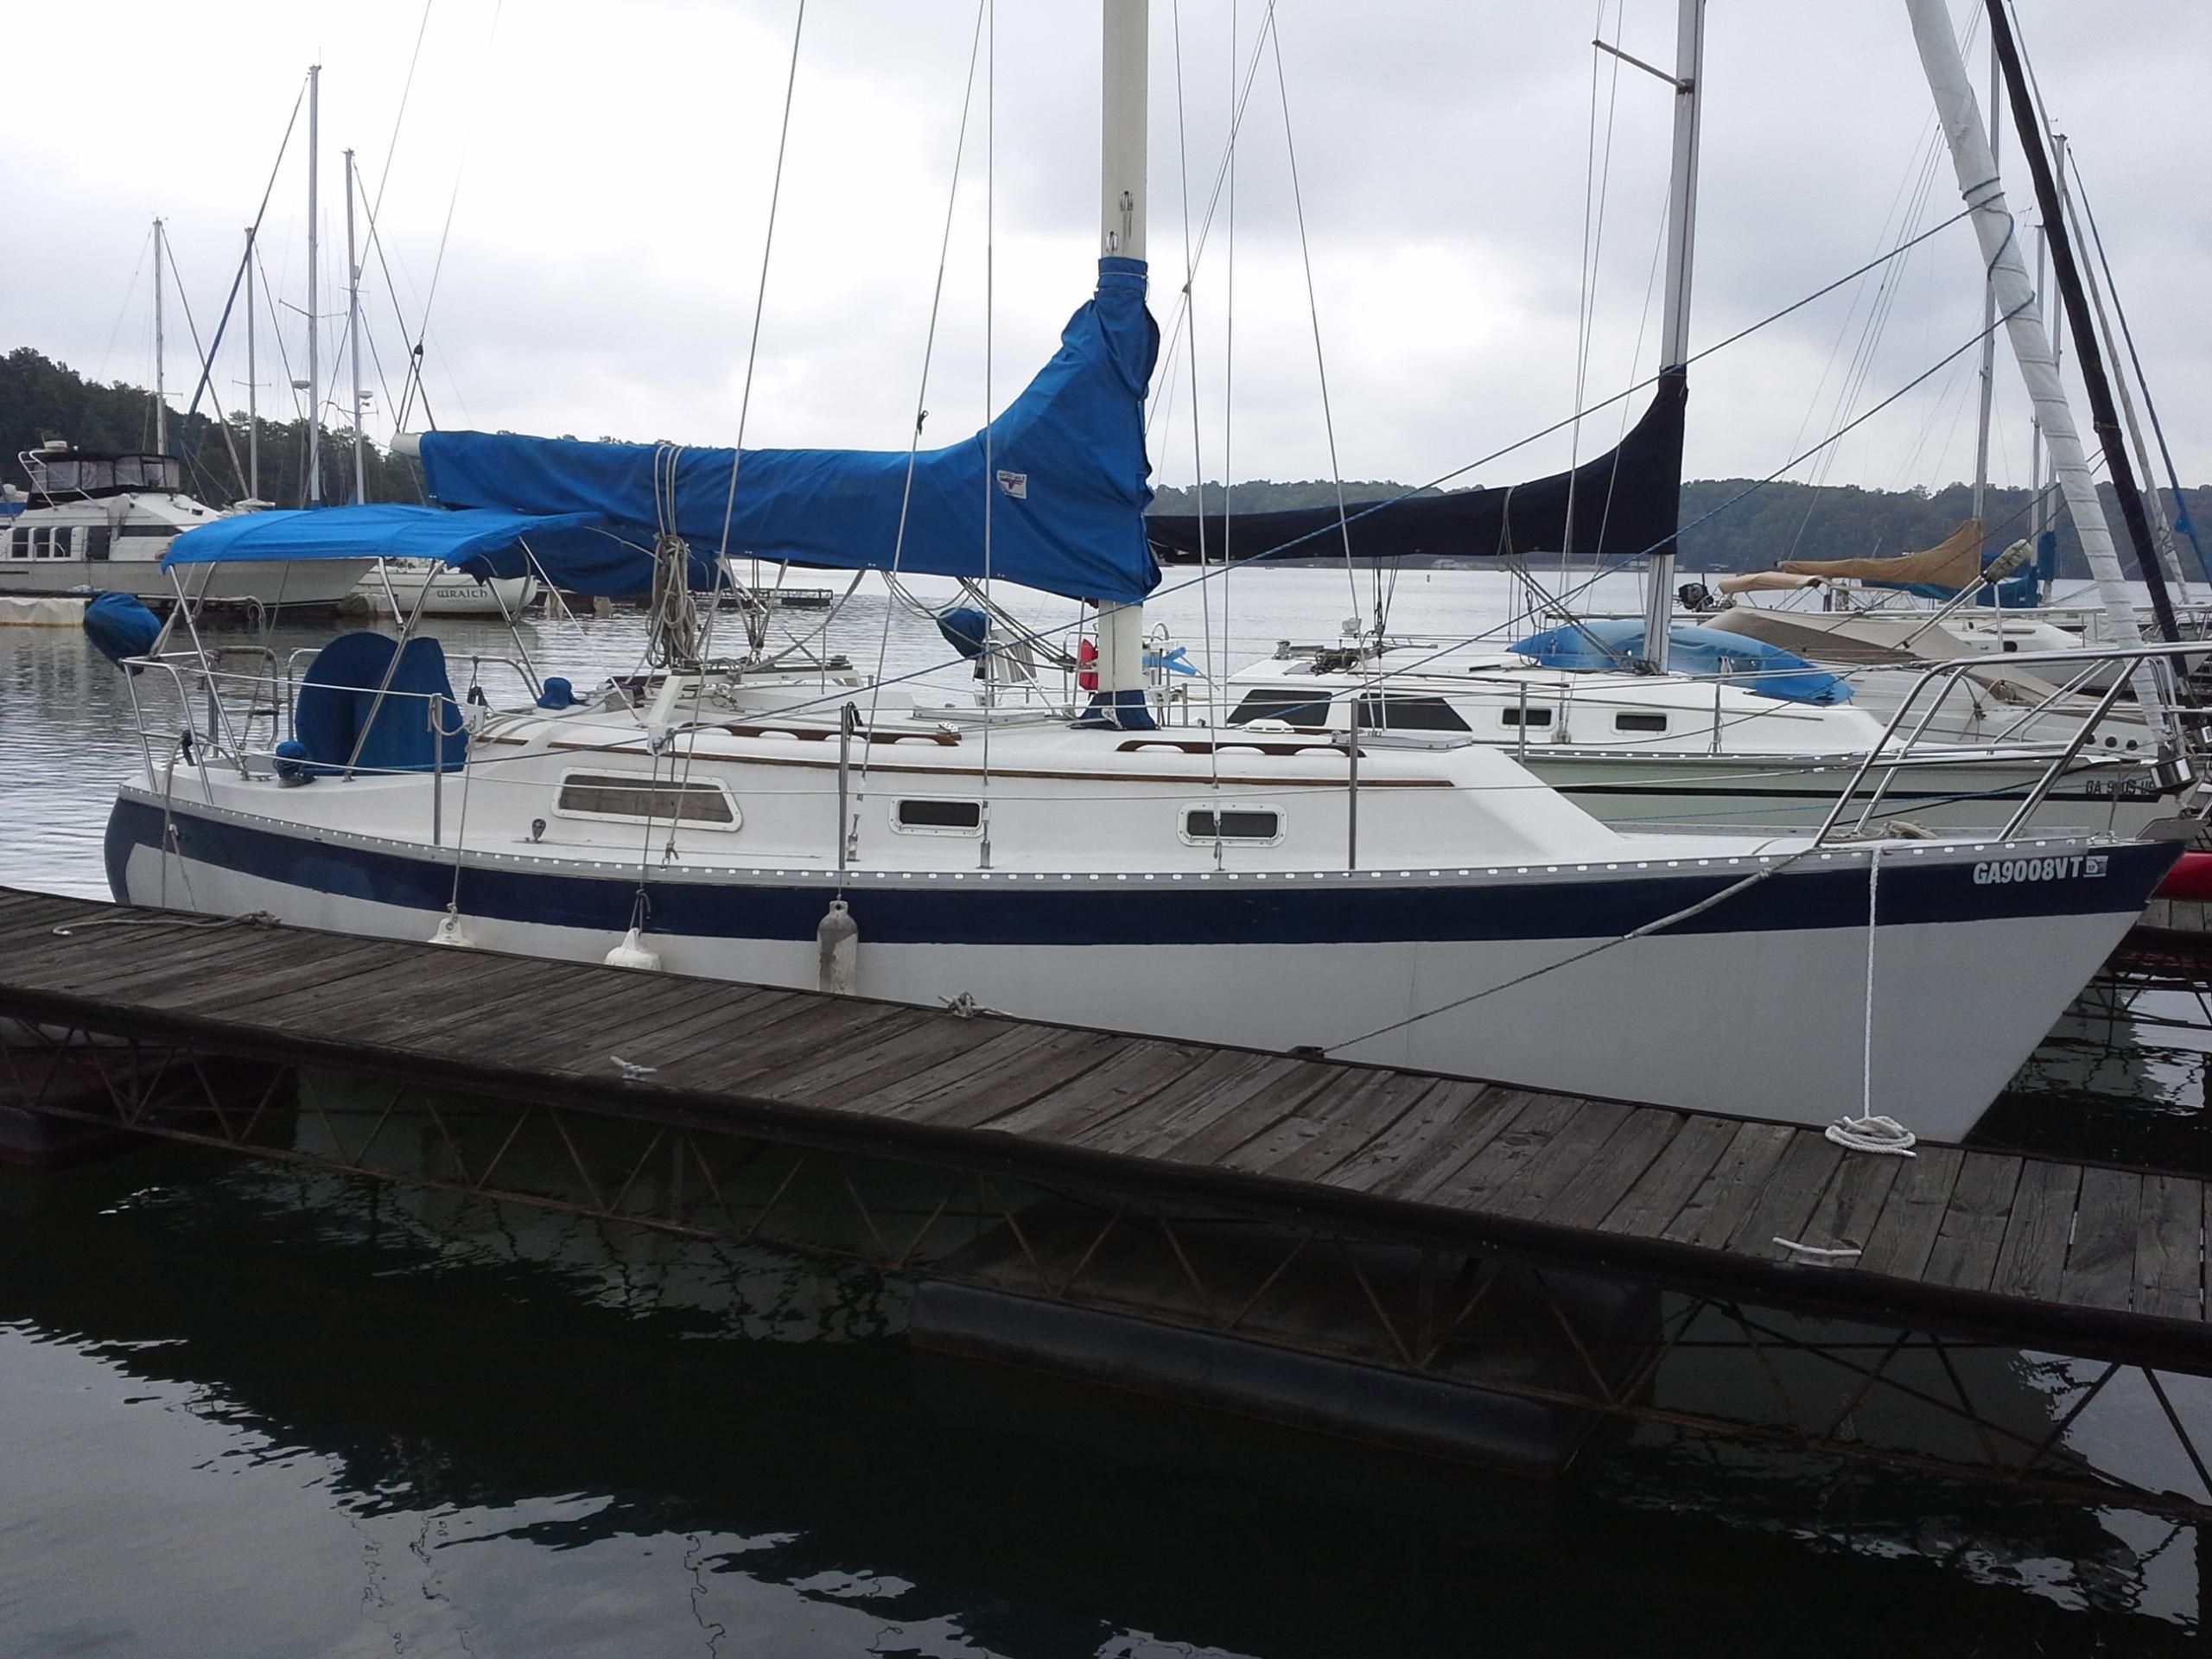 irwin 31 sailboat review